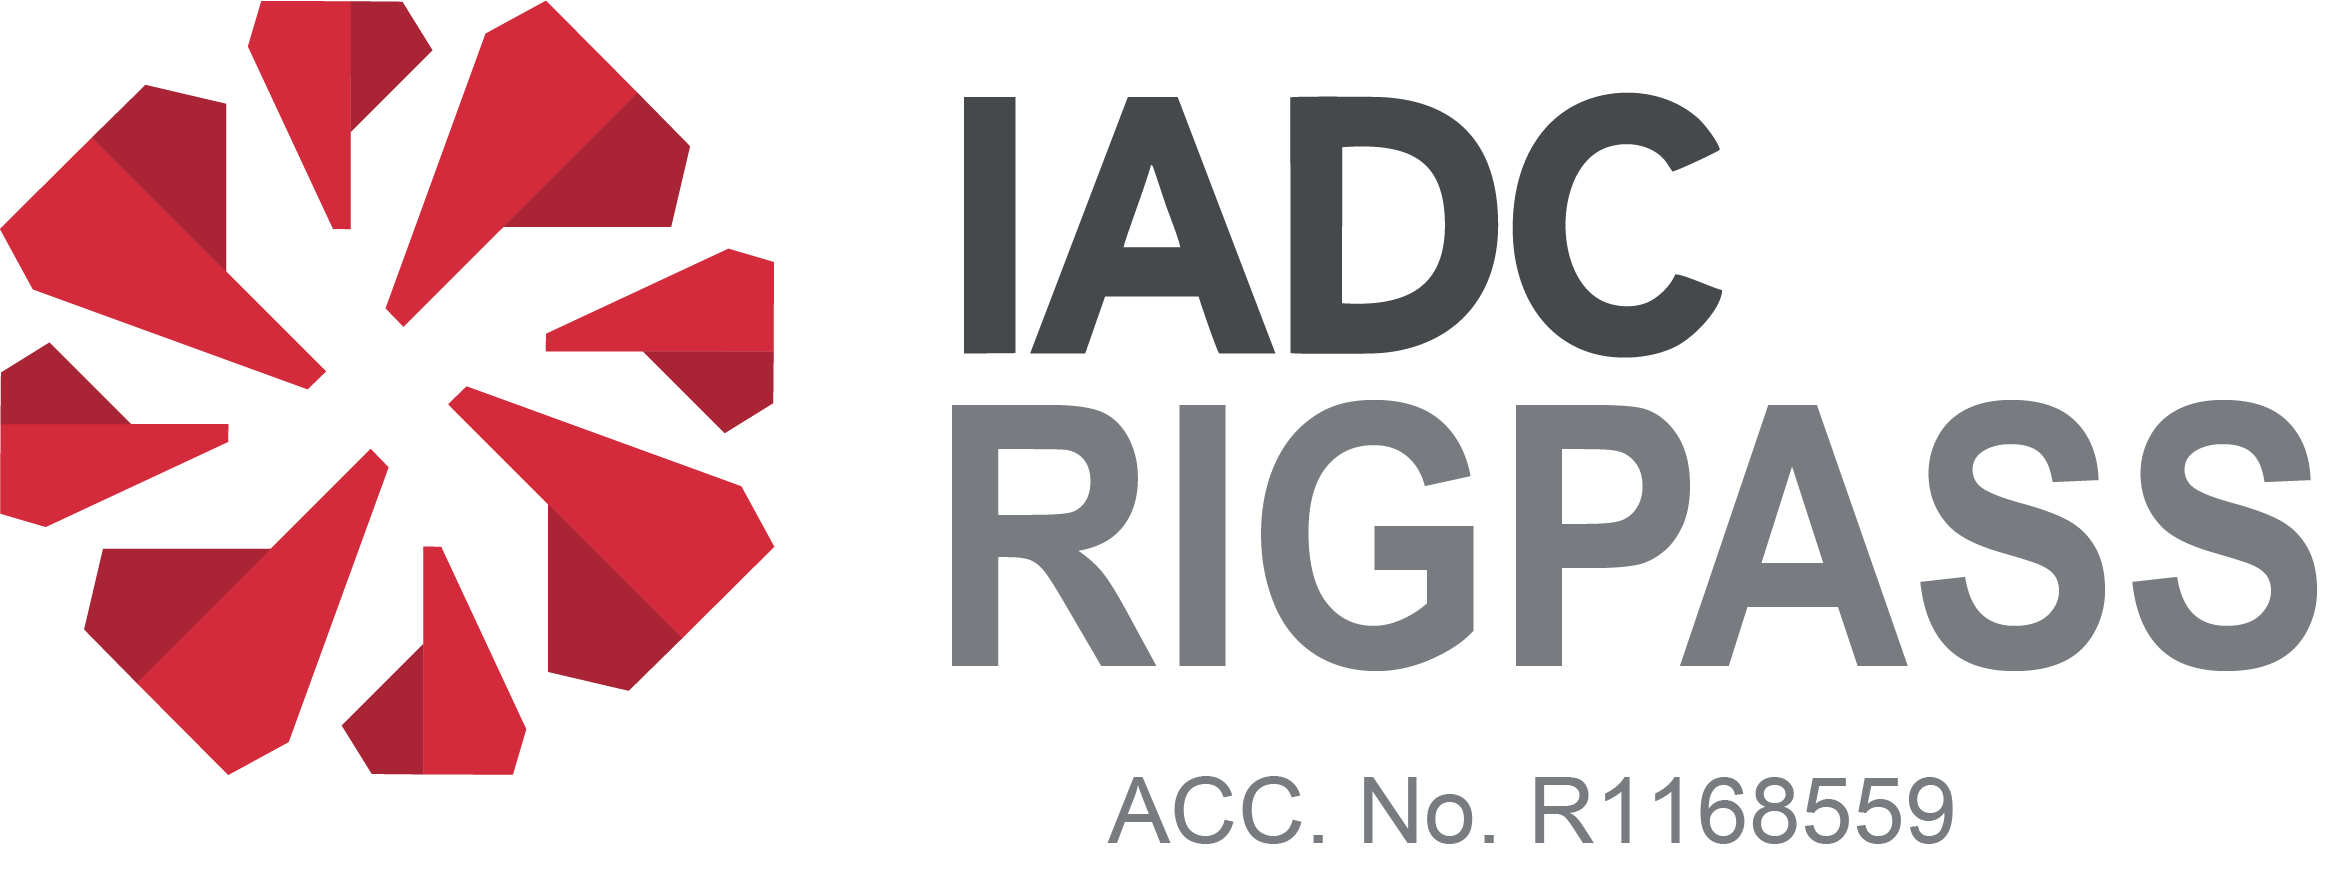 IADC-Rigpass.png